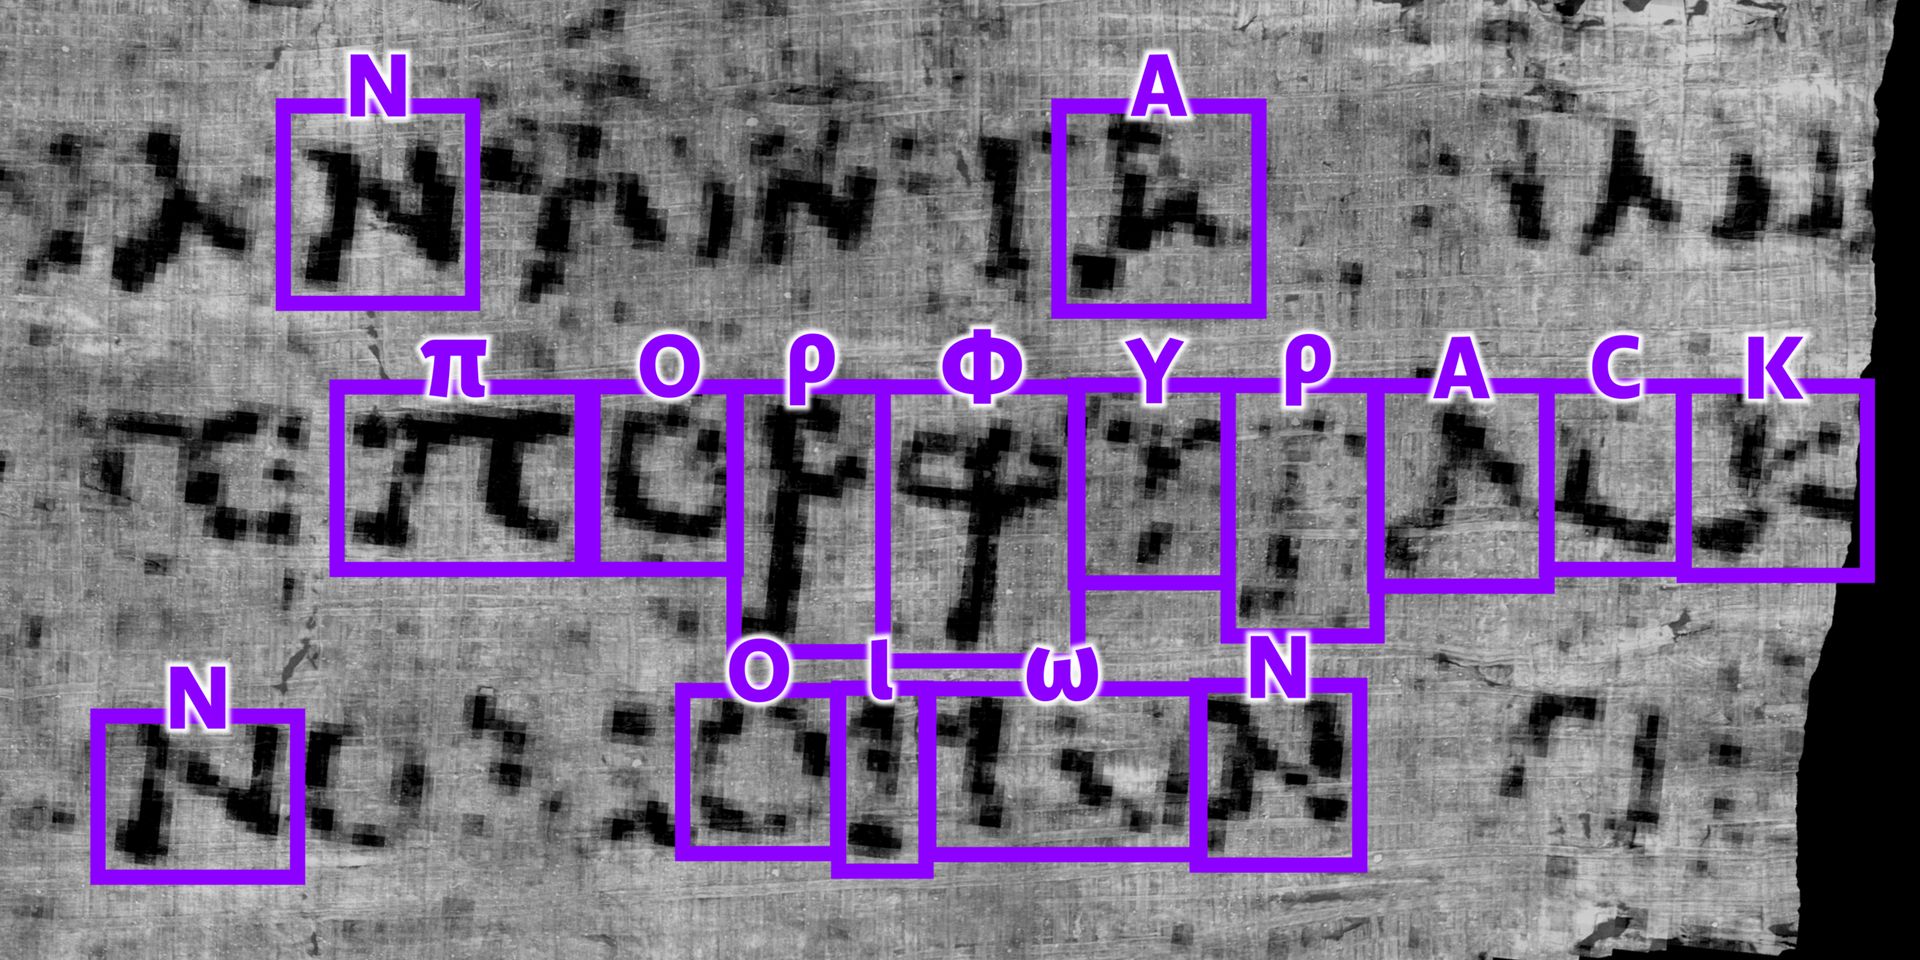 AI scroll deciphering Vesuvius Challenge